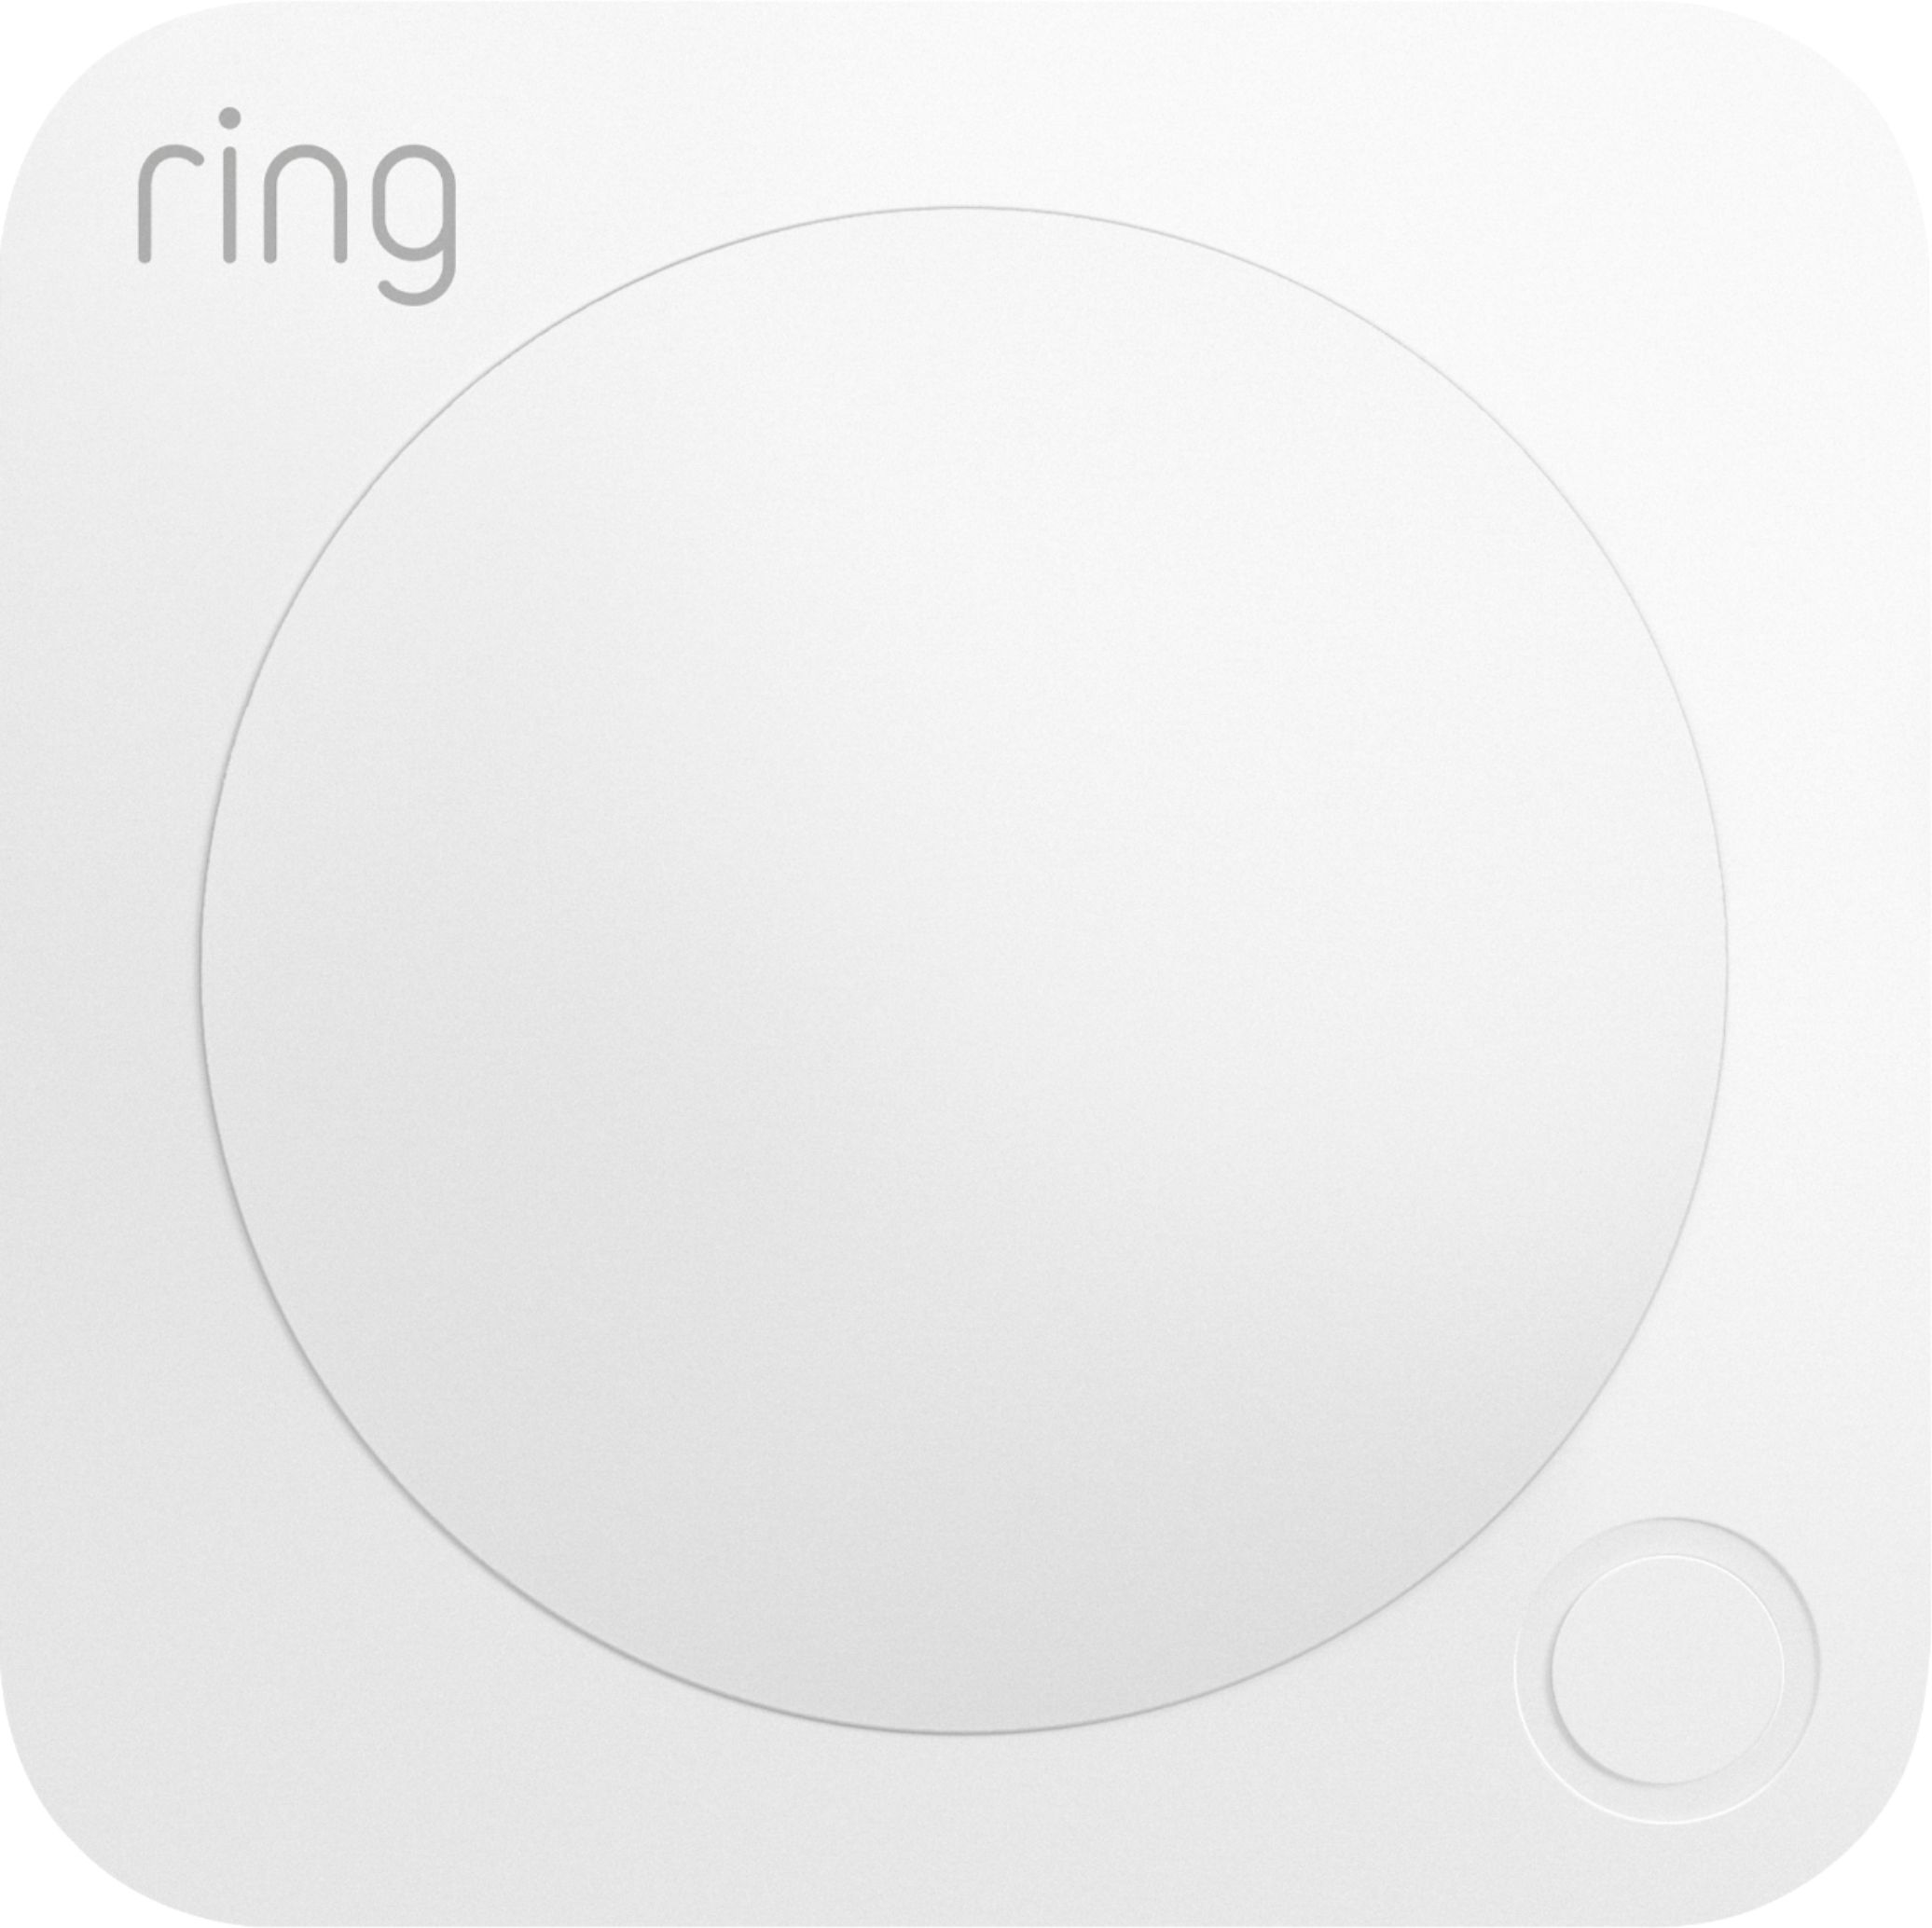 Ring Alarm Glass Break Sensor